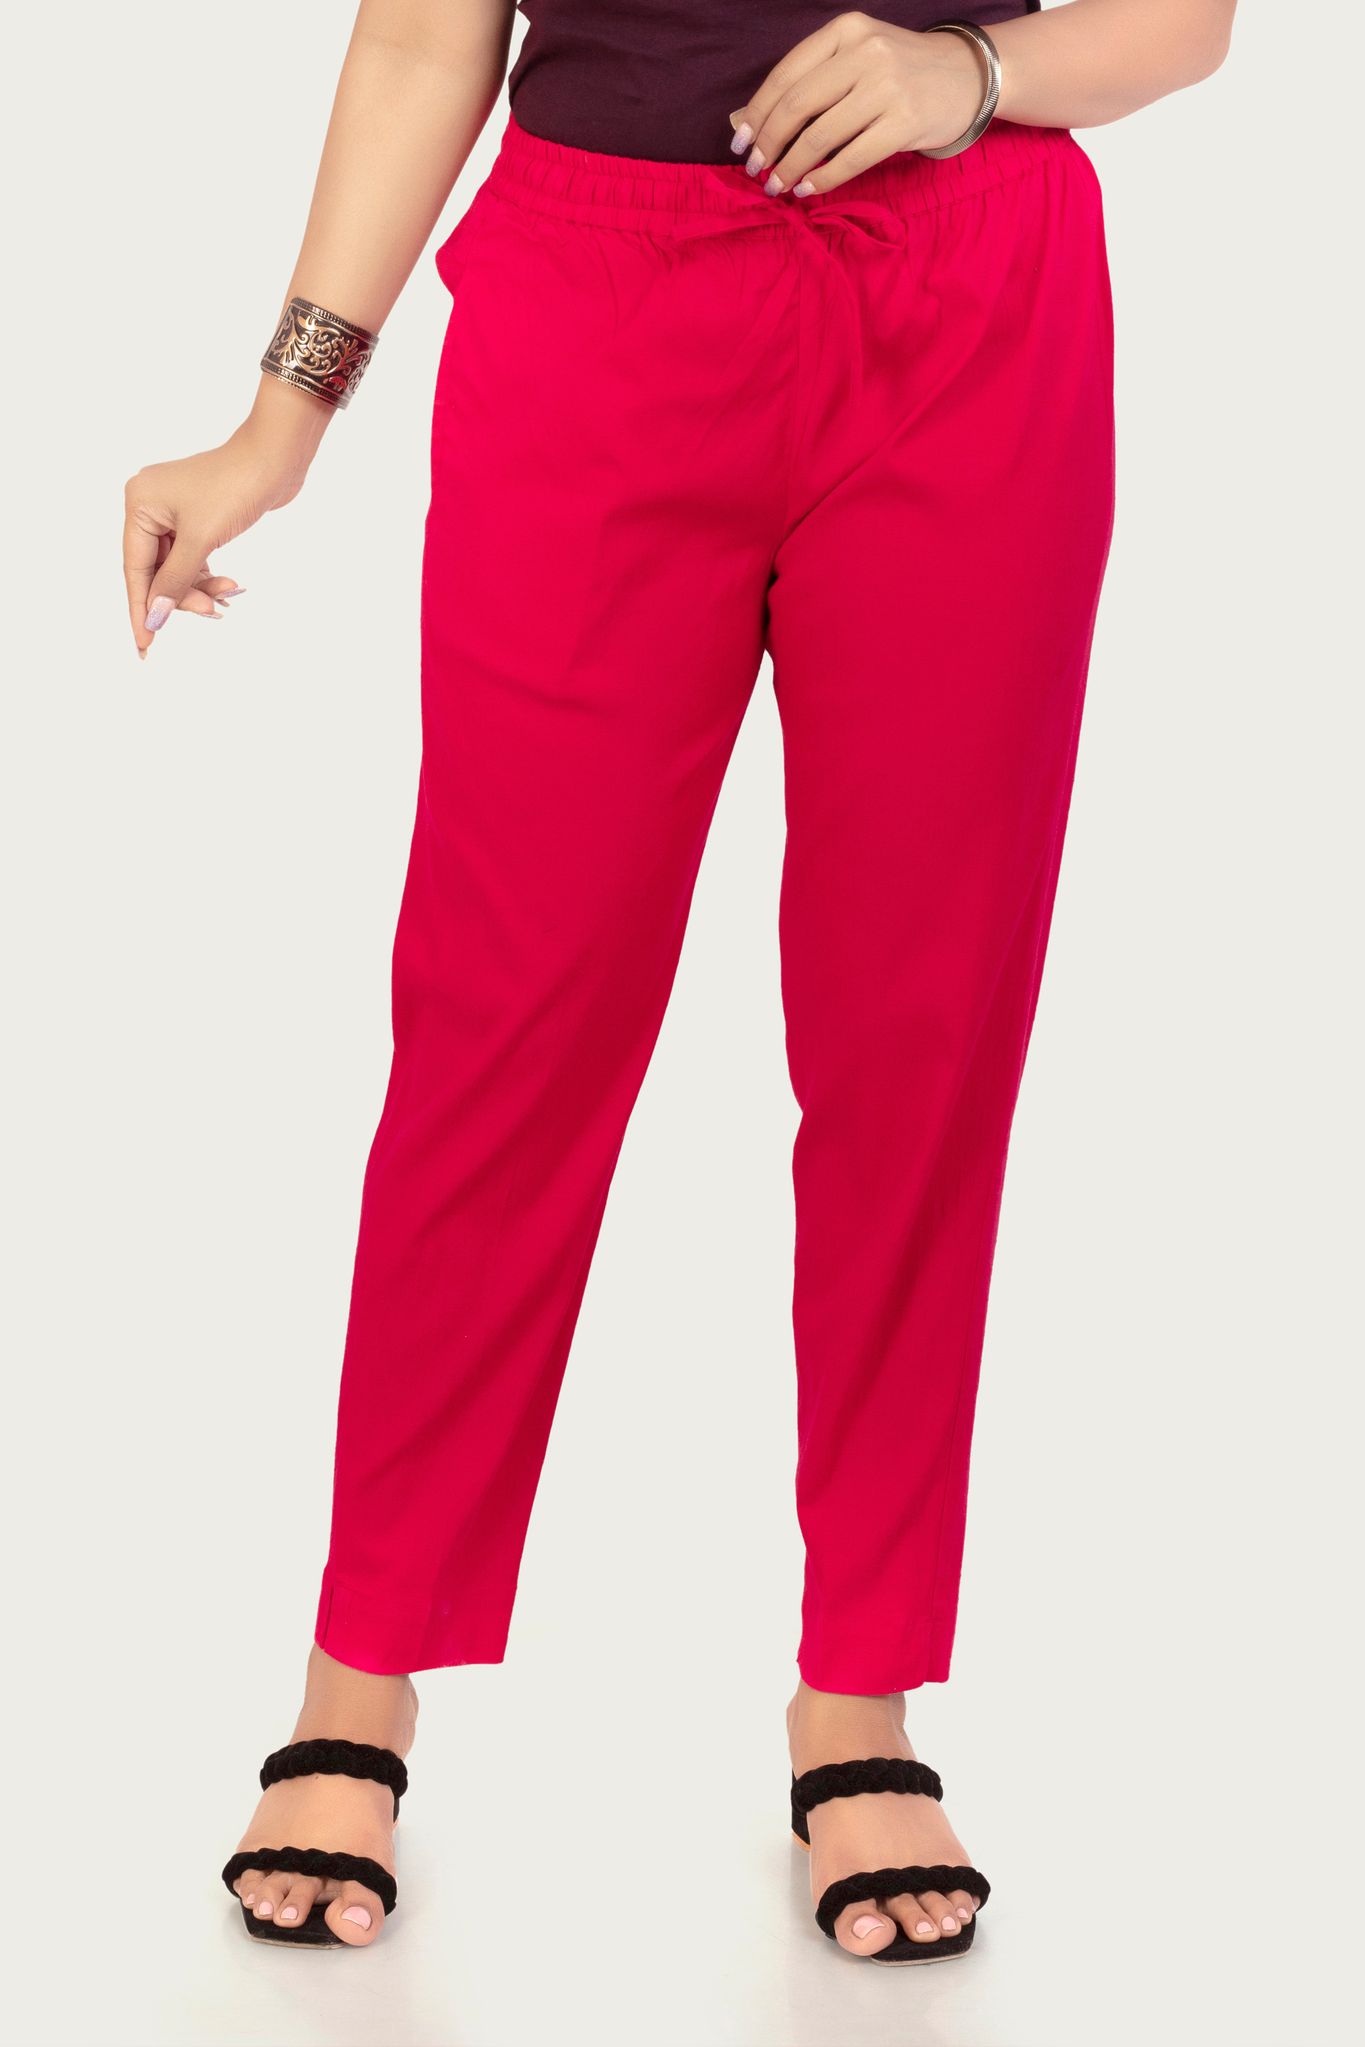 Women's Rani Pink Cotton Lycra Pant